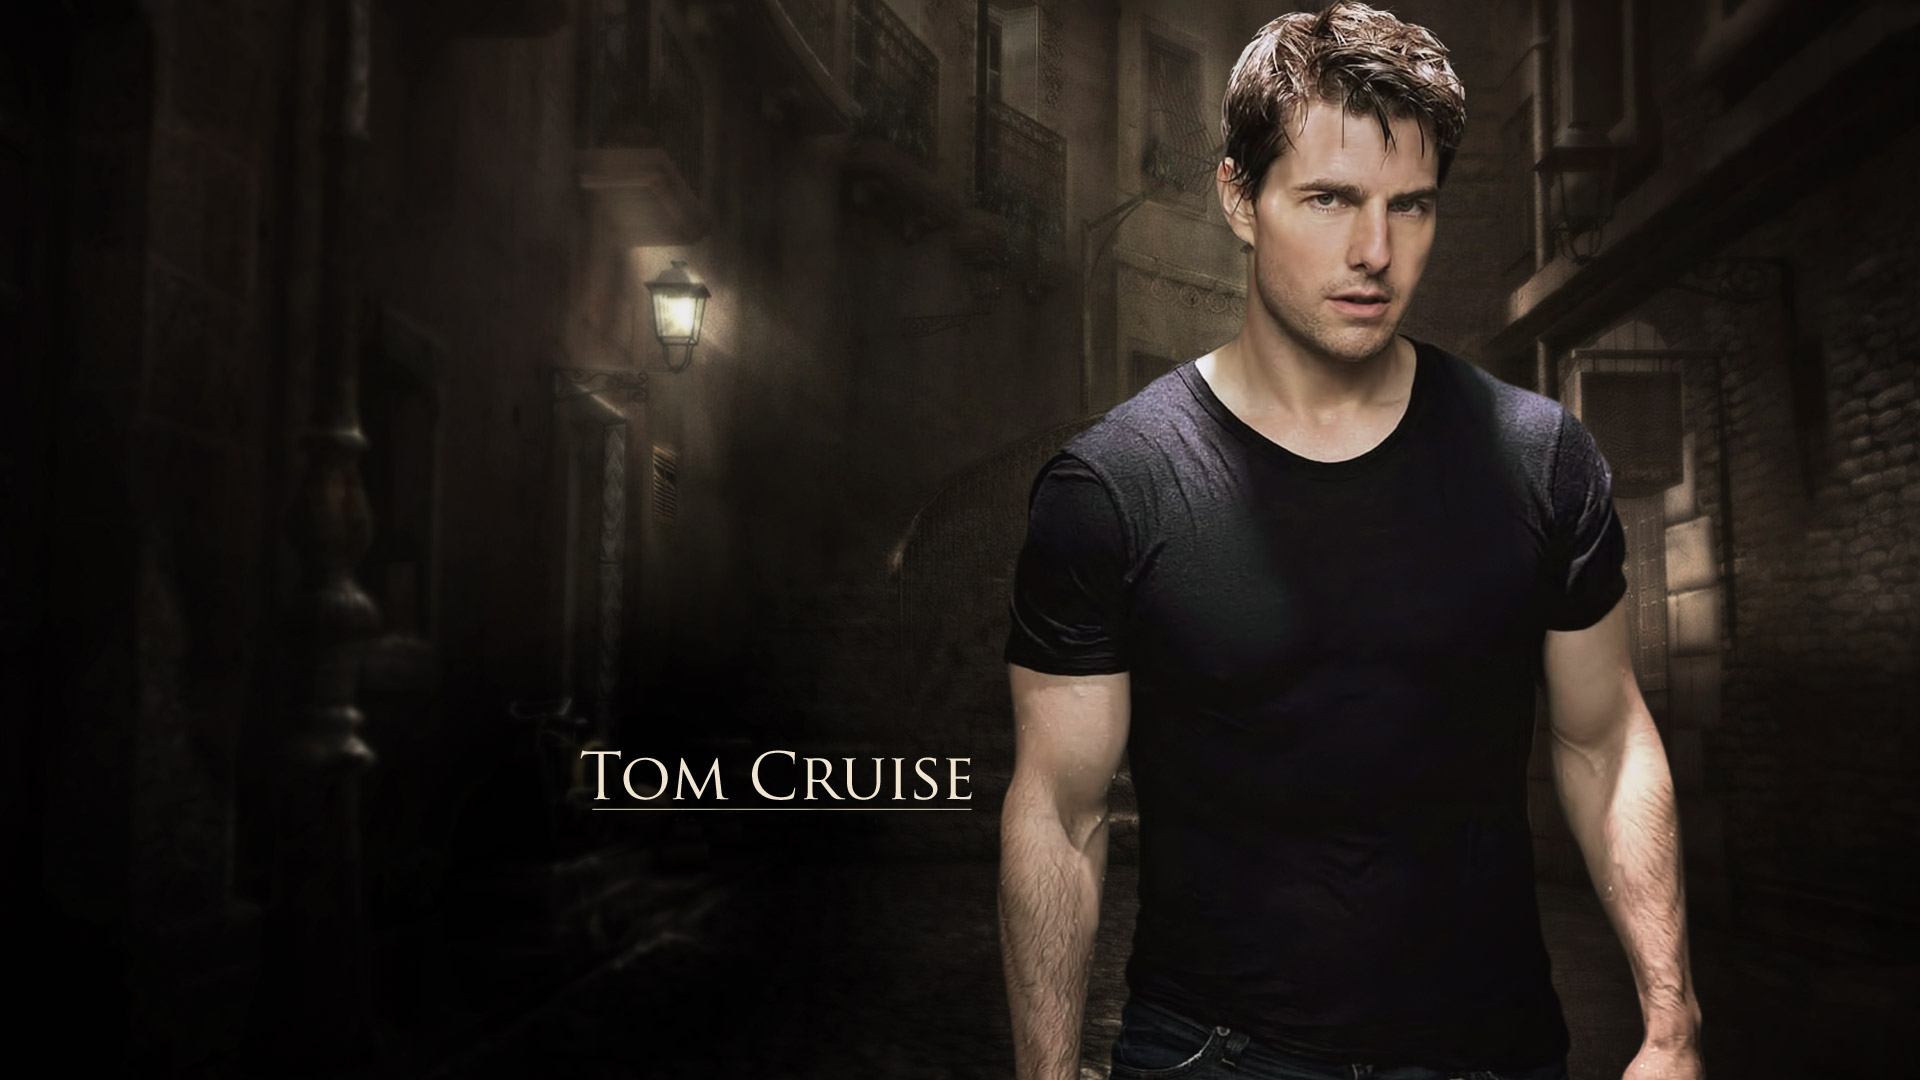 Tom Cruise Image Wallpaper